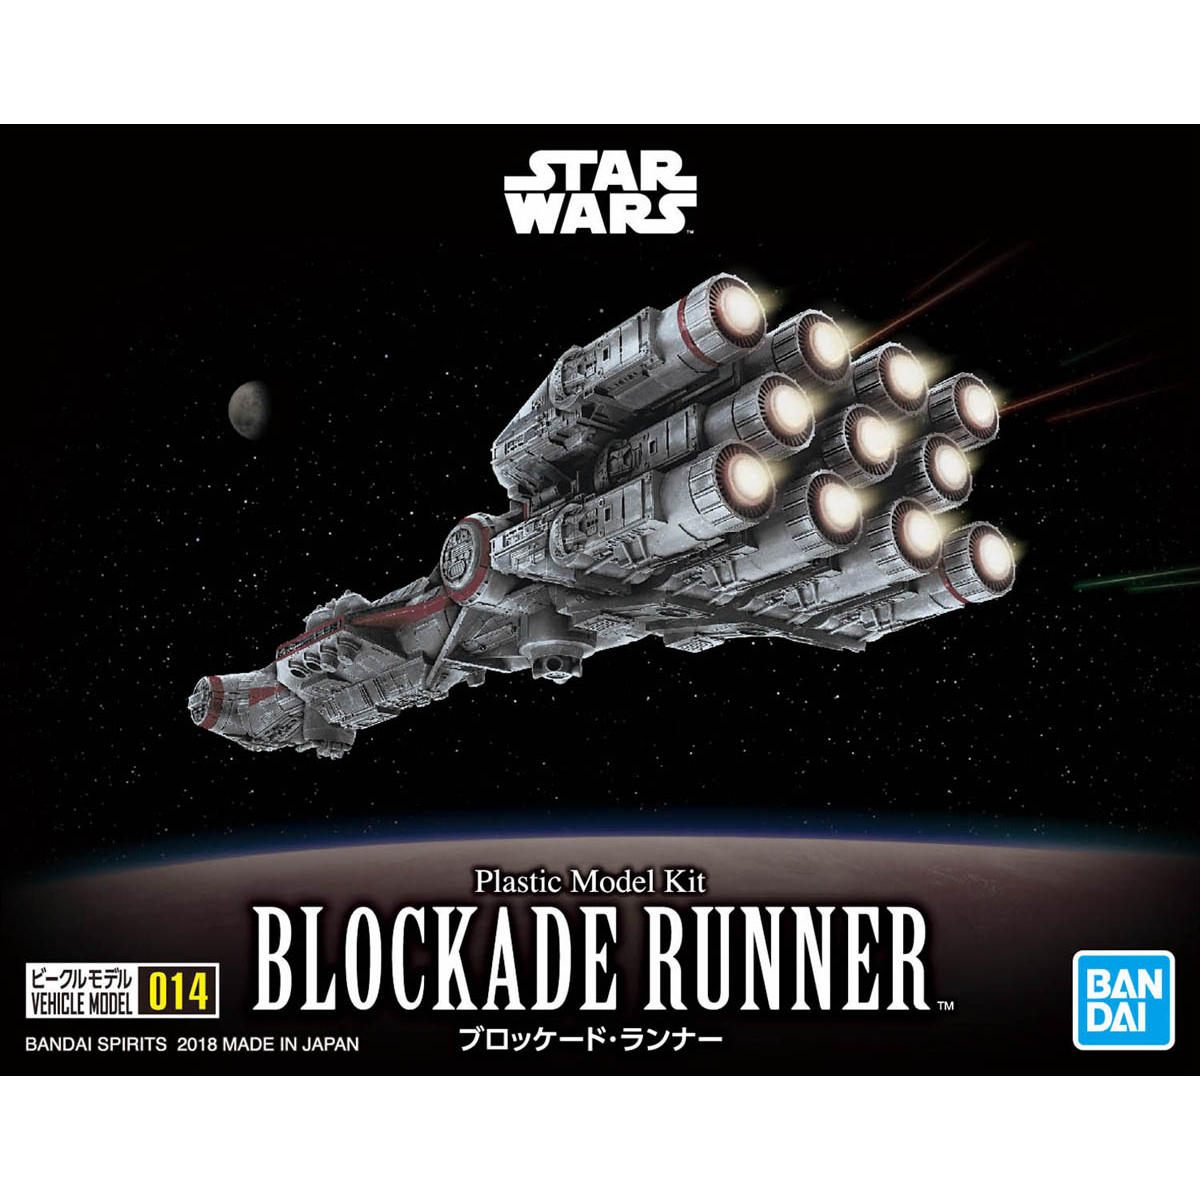 Star Wars Bandai Vehicle Model Kit 014: Blockade Runner 